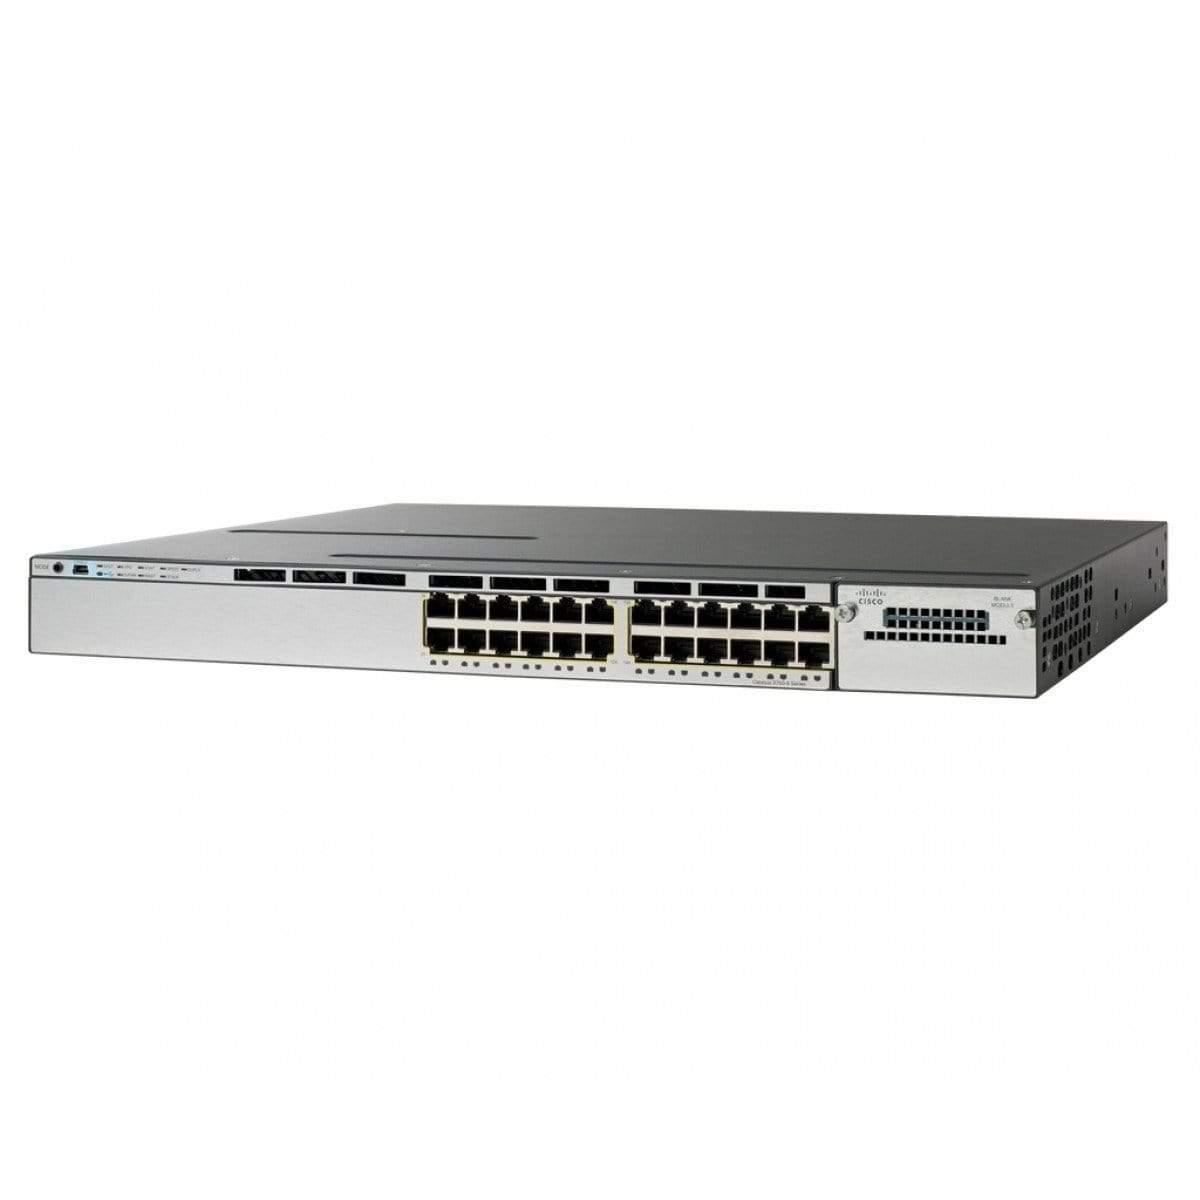 Cisco Catalyst C3850 24 Port Gigabit Switch - WS-C3850-24P-E - WS-C3850-24P-E - Reef Telecom